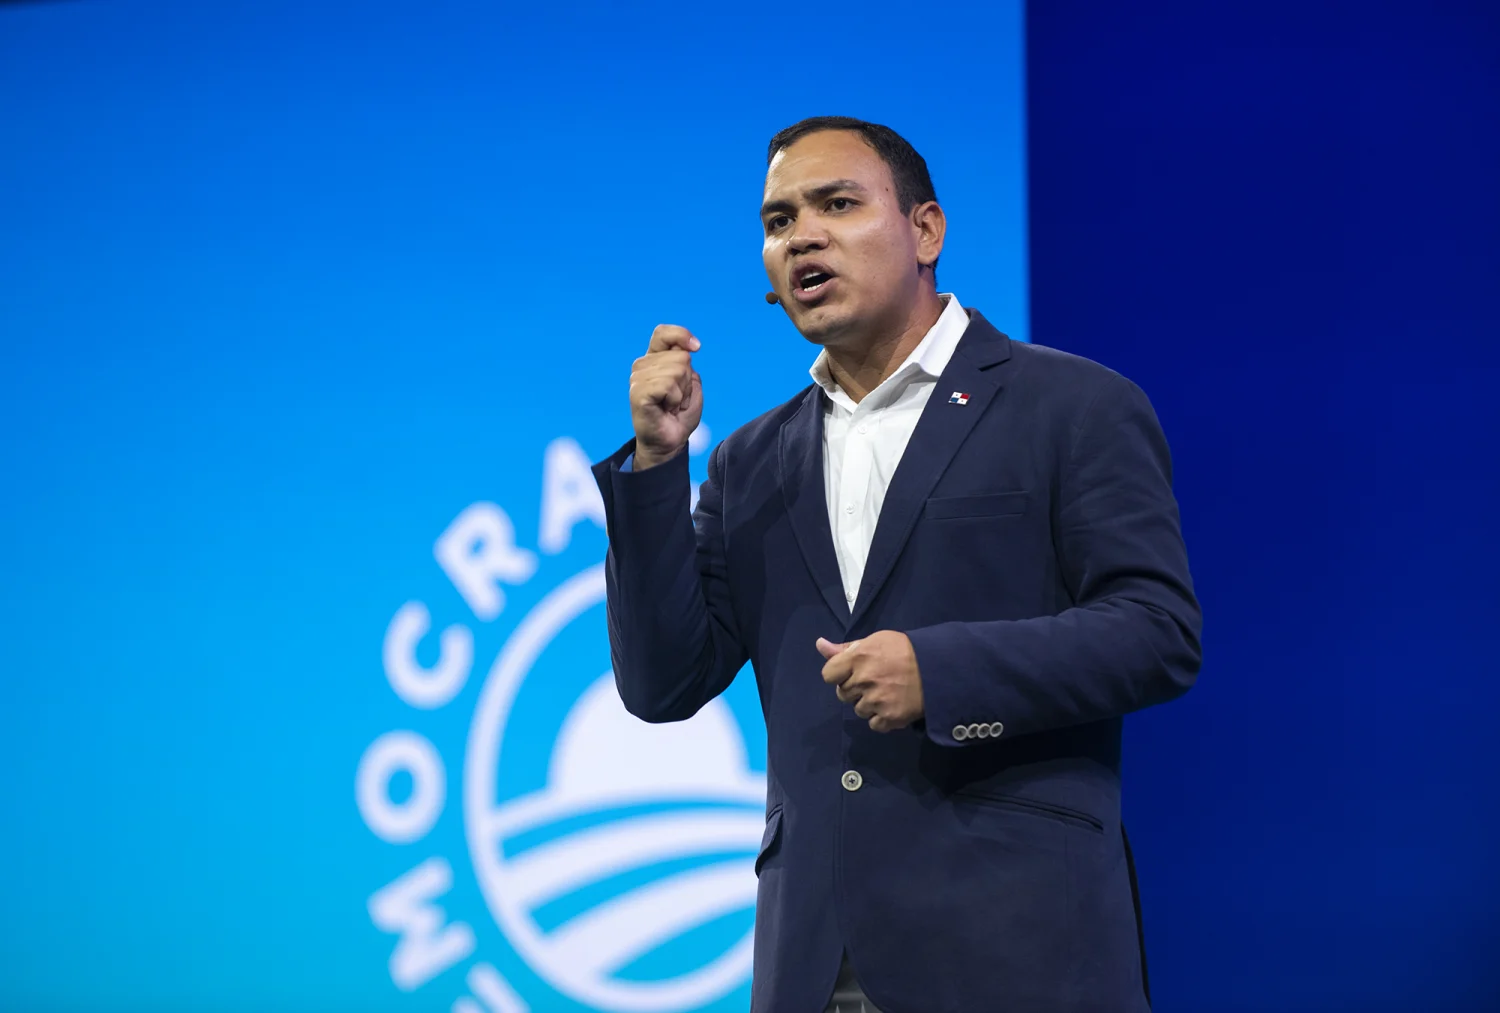 Juan Monterrey Carlos Gmez gives a talk titled ÒClimate-Proofing DemocracyÓ during the Obama Foundation Democracy Forum in New York on November 17, 2022. 
